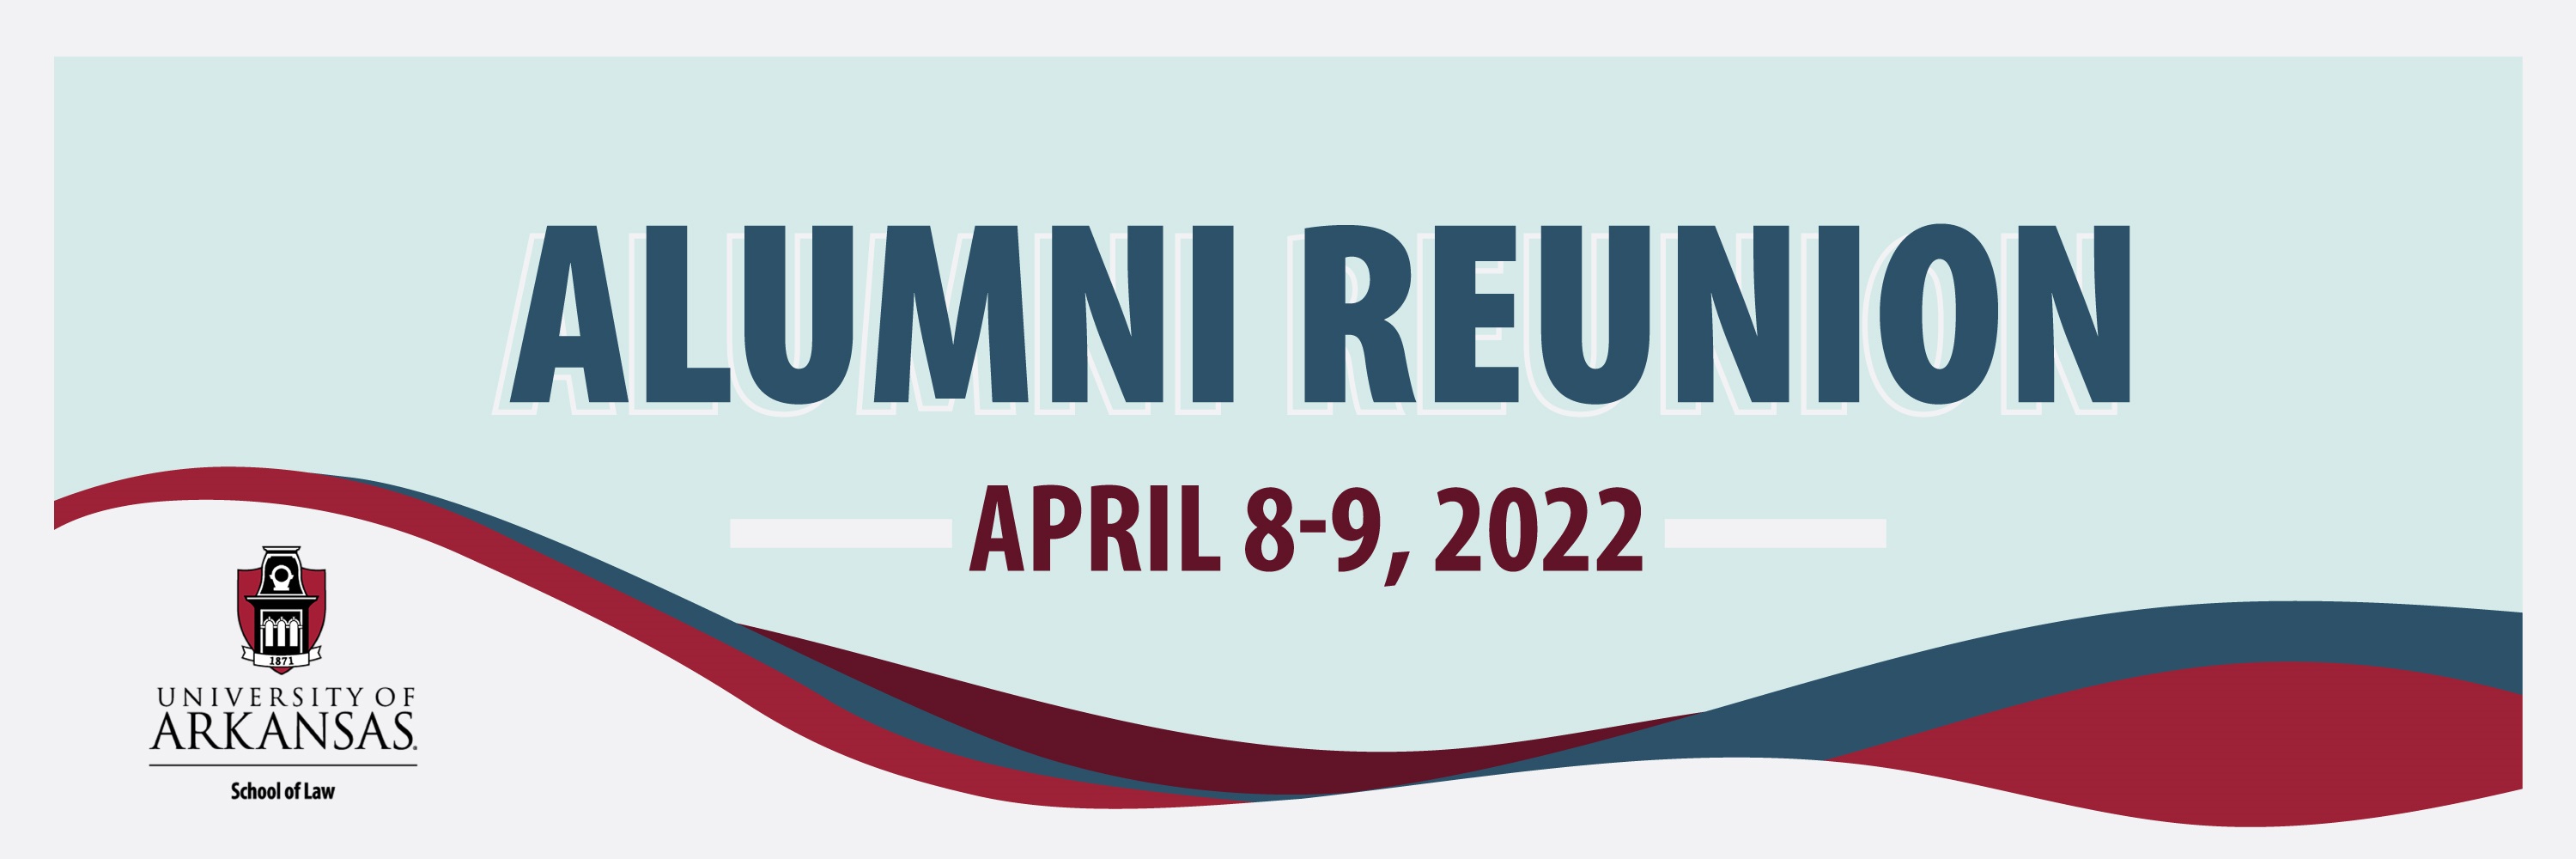 2022 Alumni Reunion Weekend banner